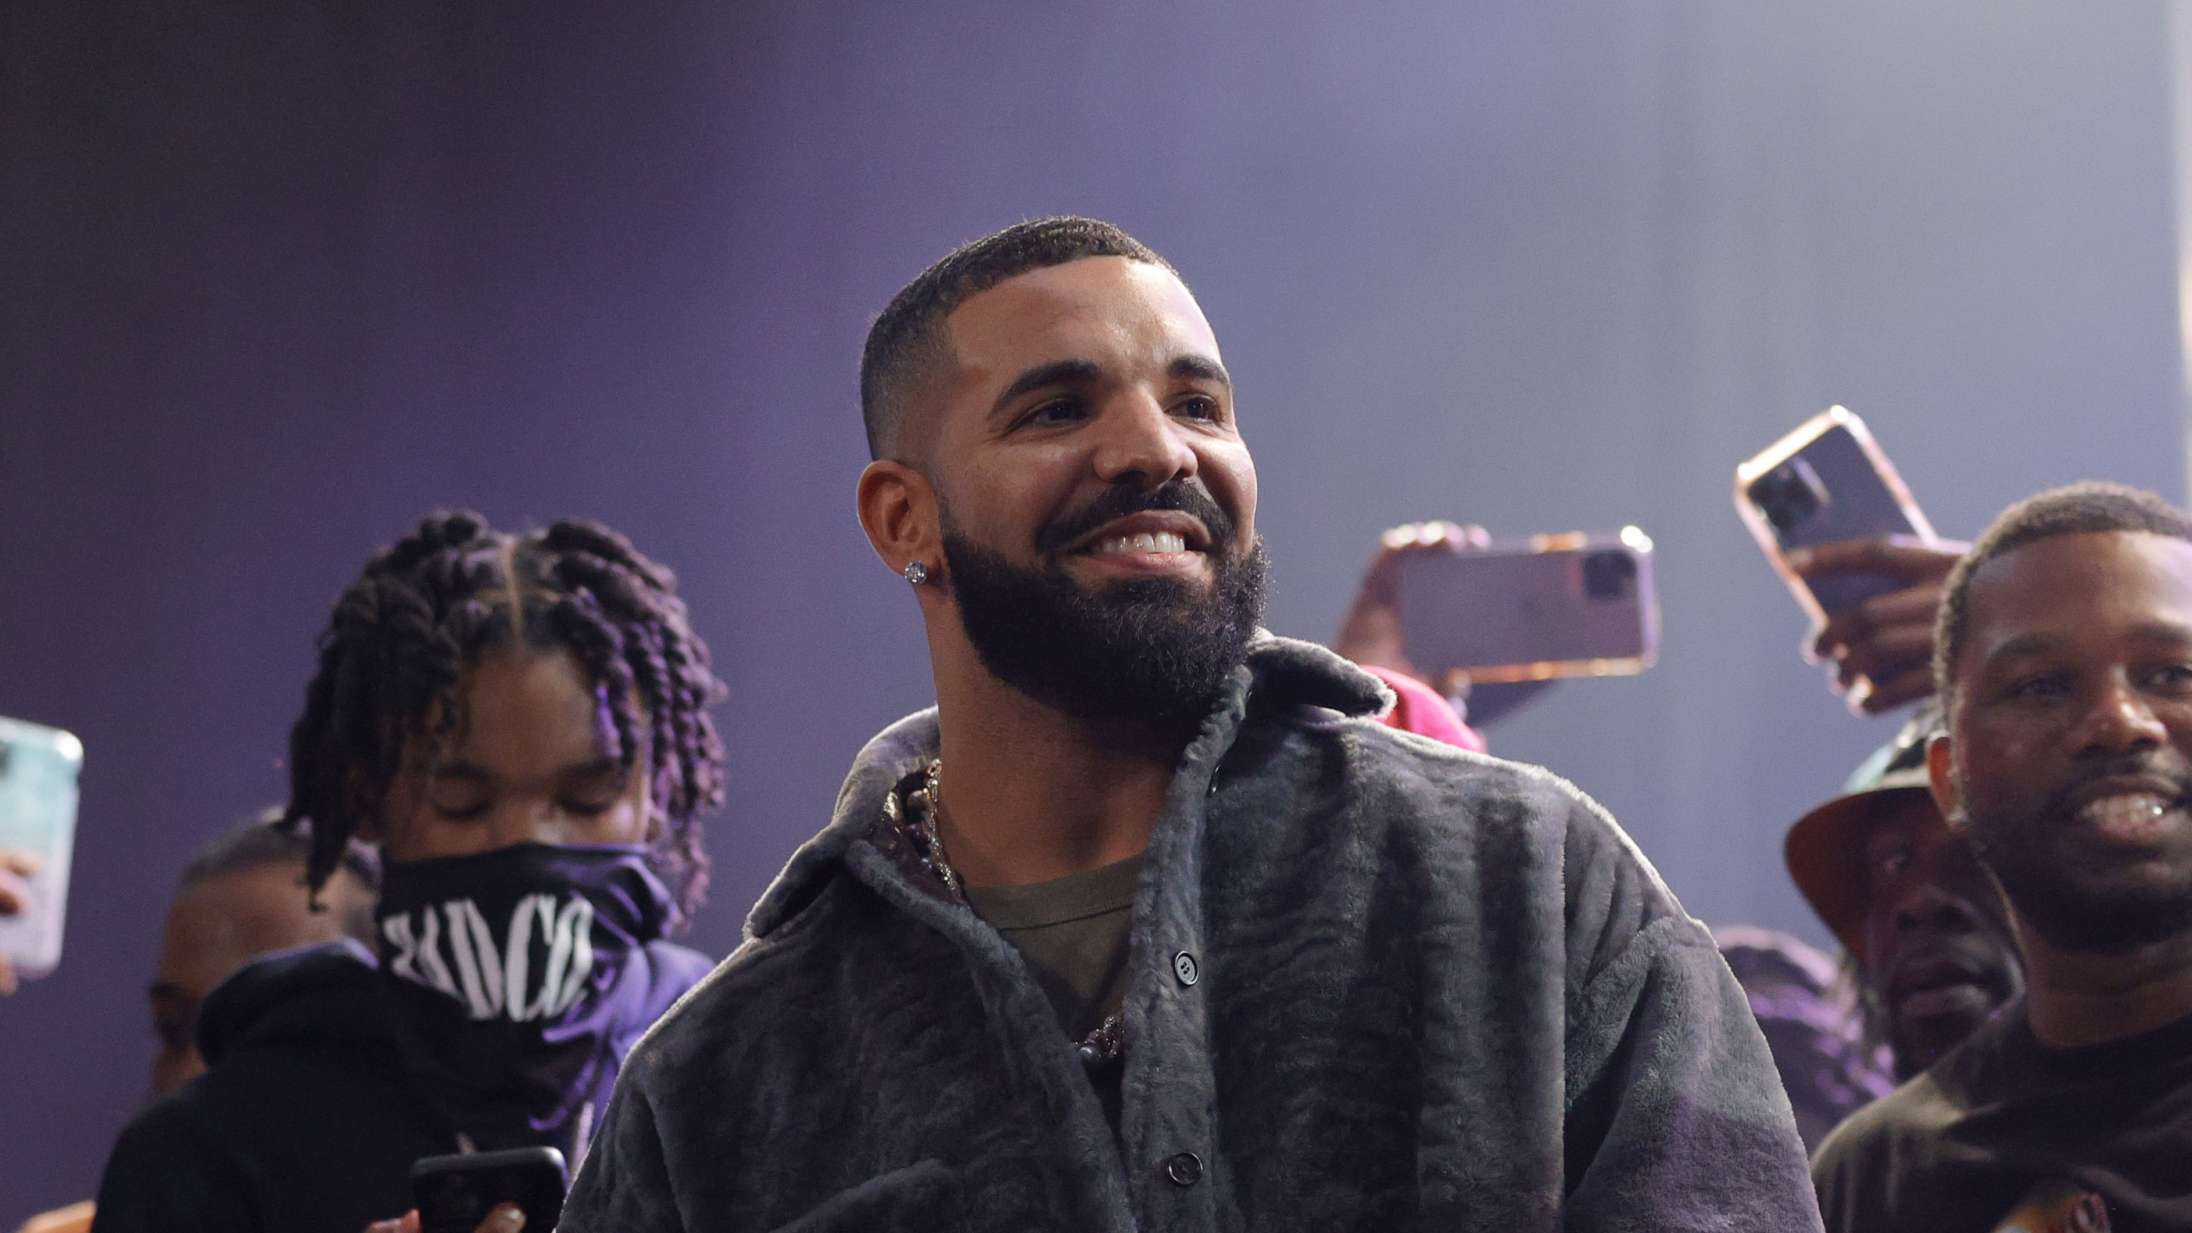 Falsk Drake bandlyst fra Instagram